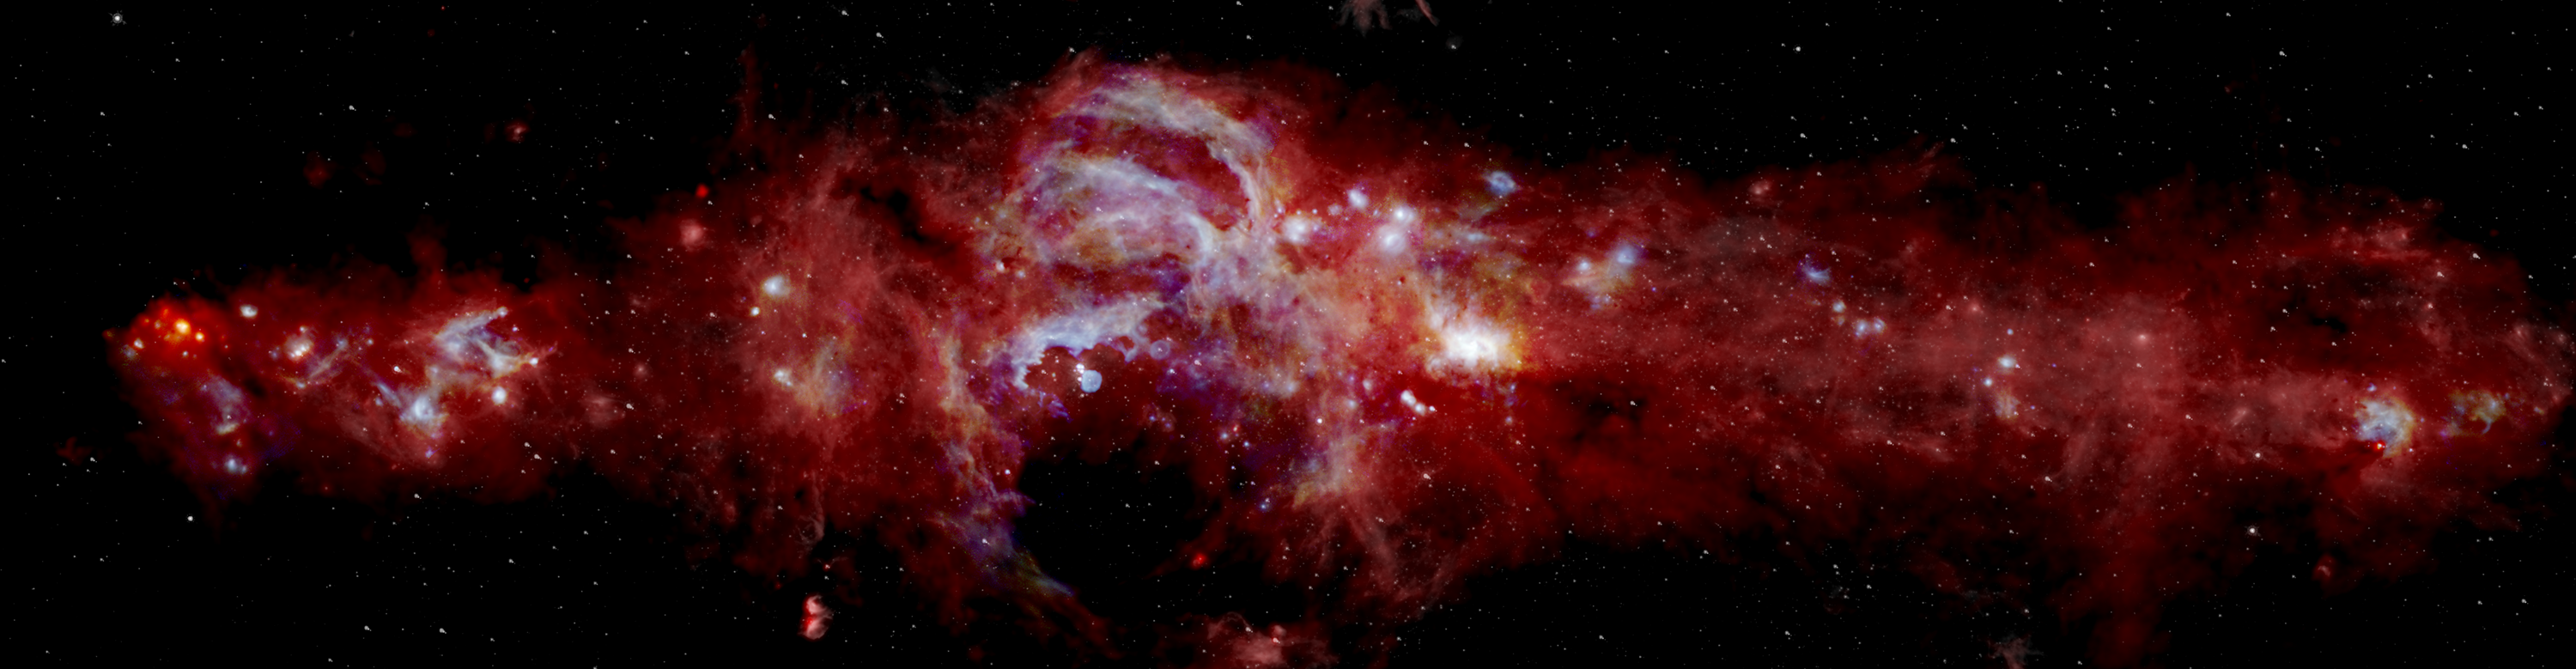 Image: NASA/SOFIA/JPL-Caltech/ESA/Herschel